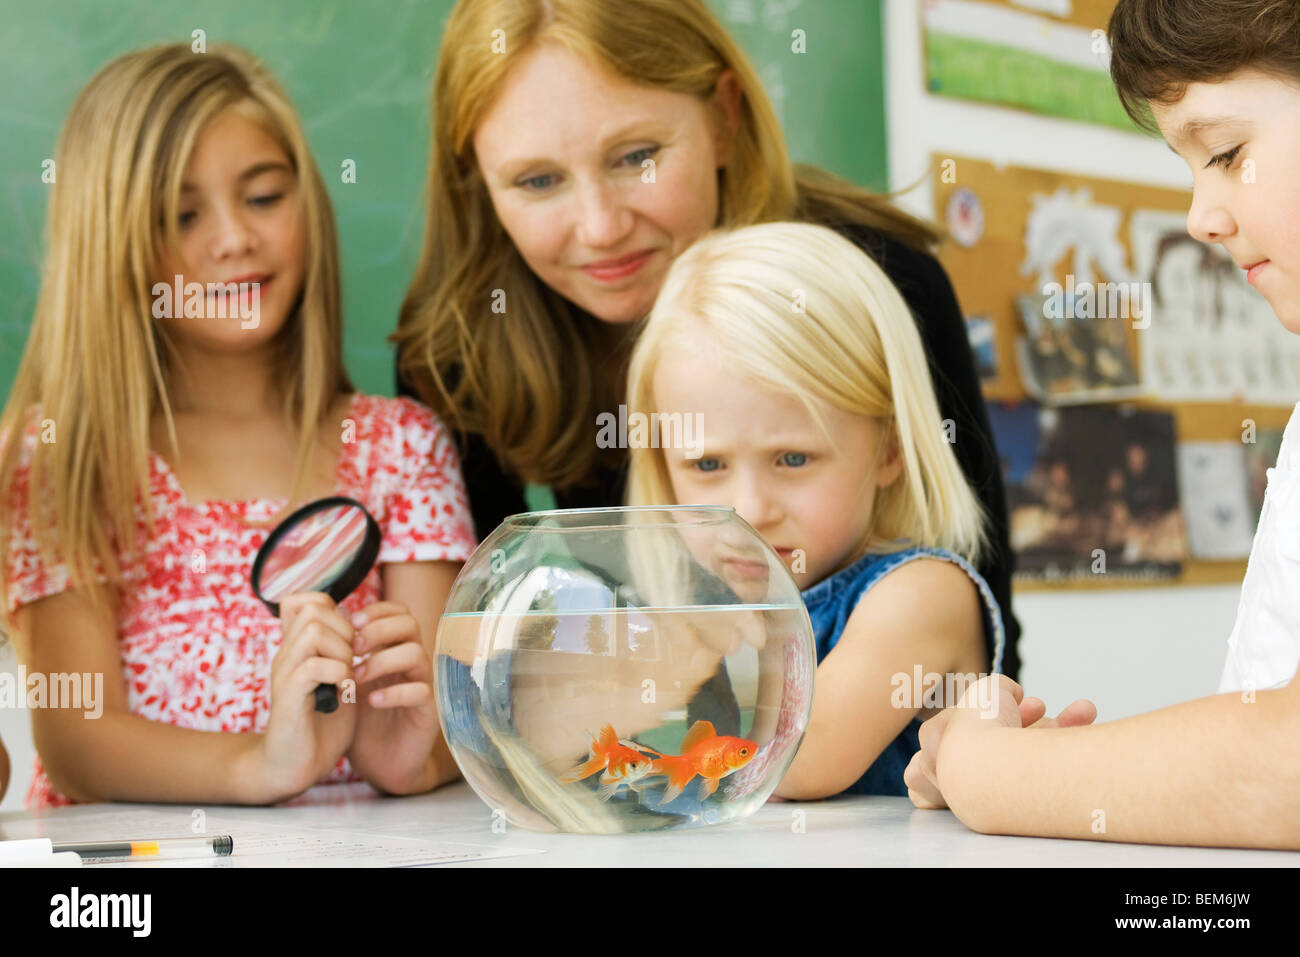 Elementary teacher and students gathered around goldfish bowl Stock Photo